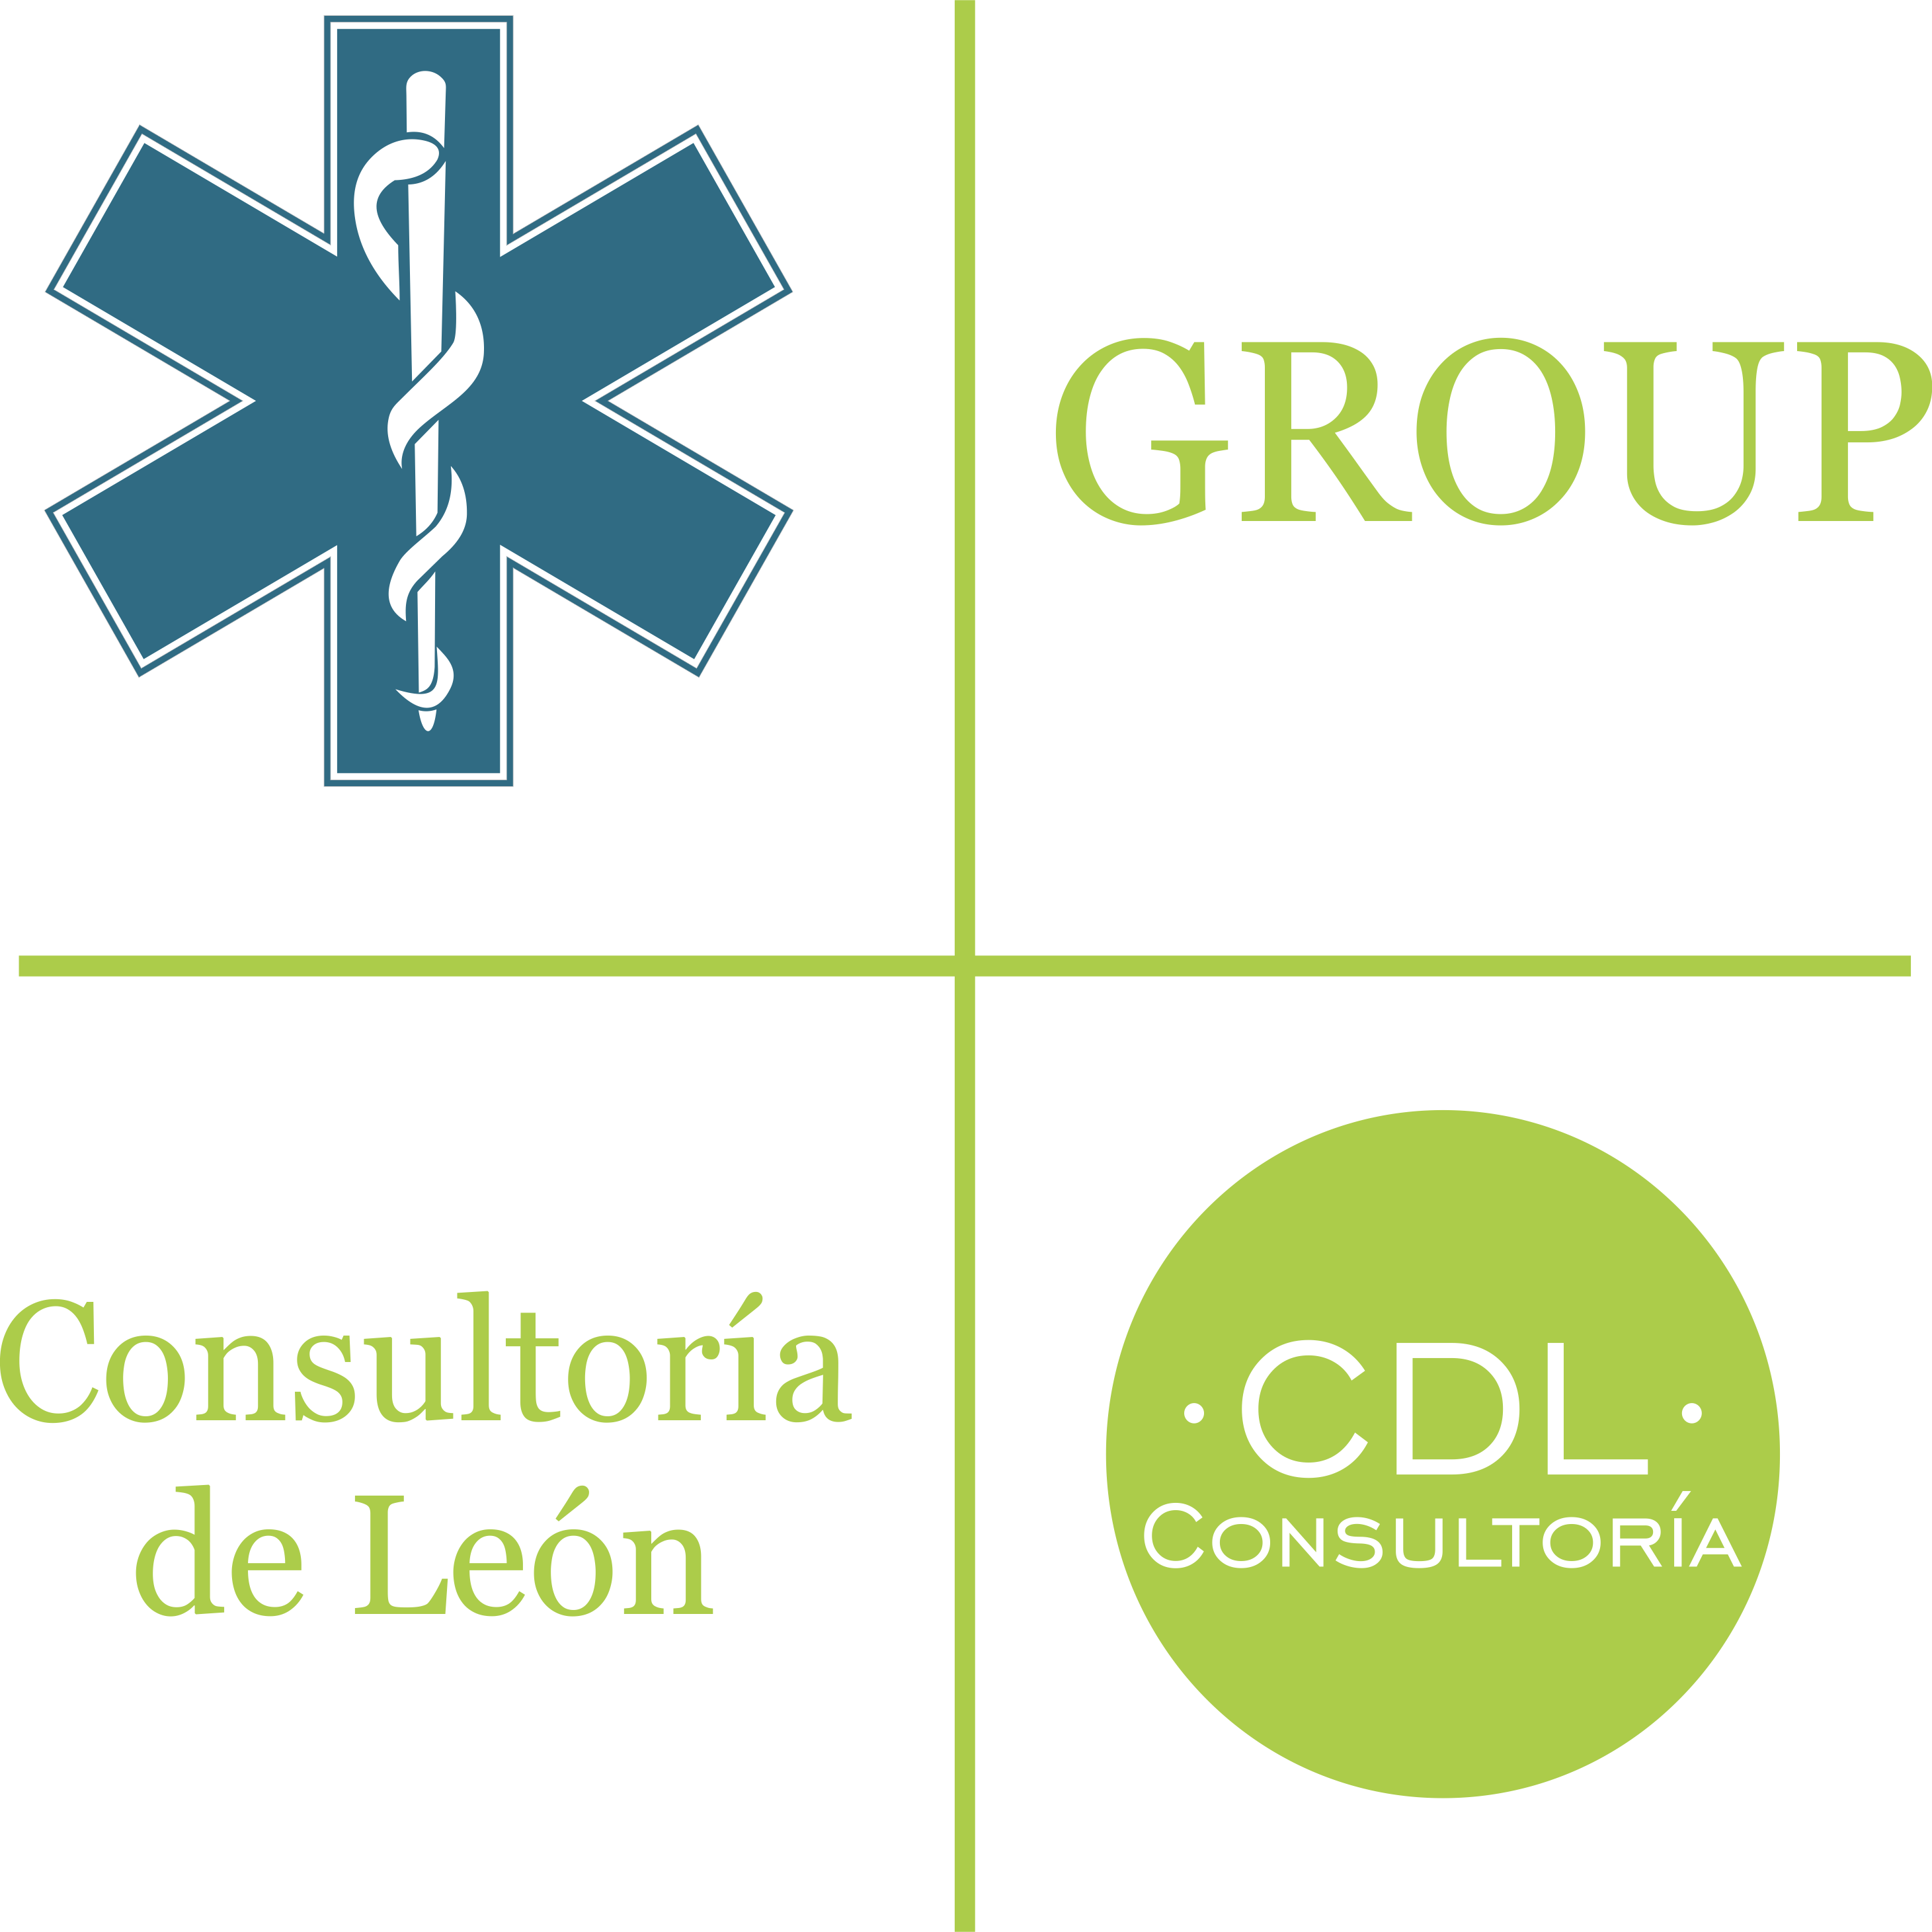 Capacitación en Protección Civil – Group CDL Consultoría – León